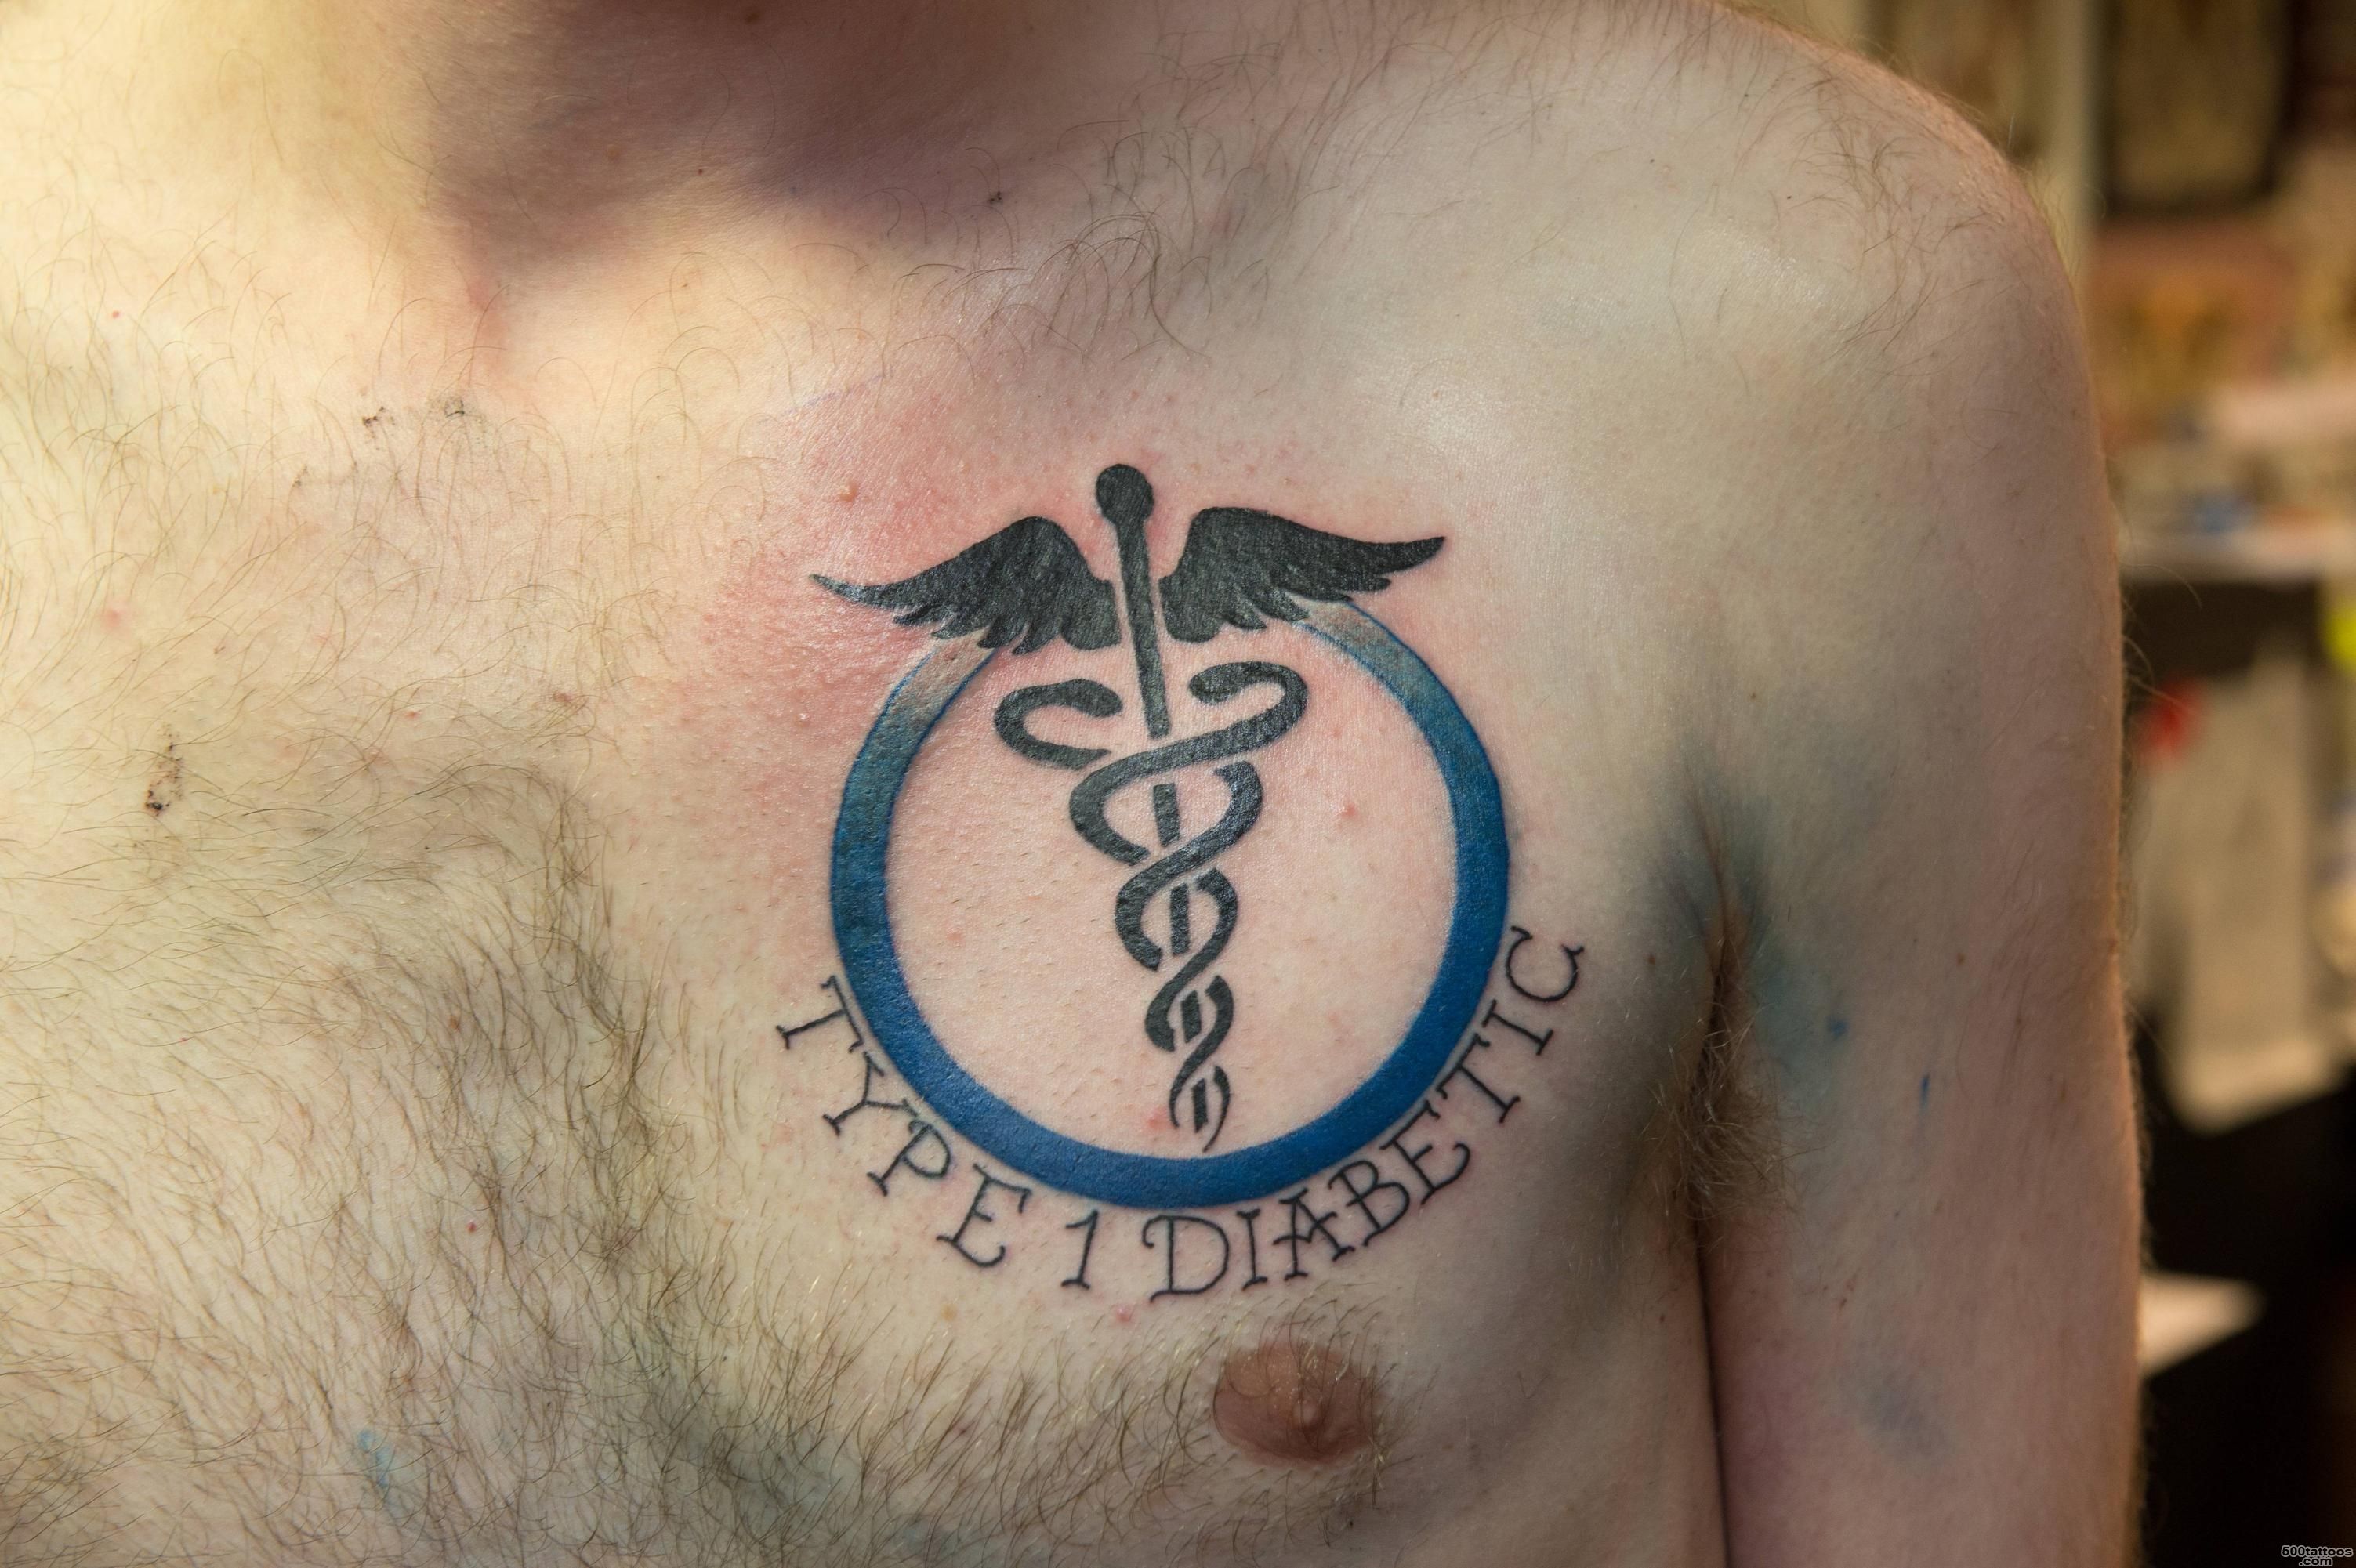 Medical Alert Tattoo Ideas  Tattoo Ideas Gallery amp Designs 2016 ..._37